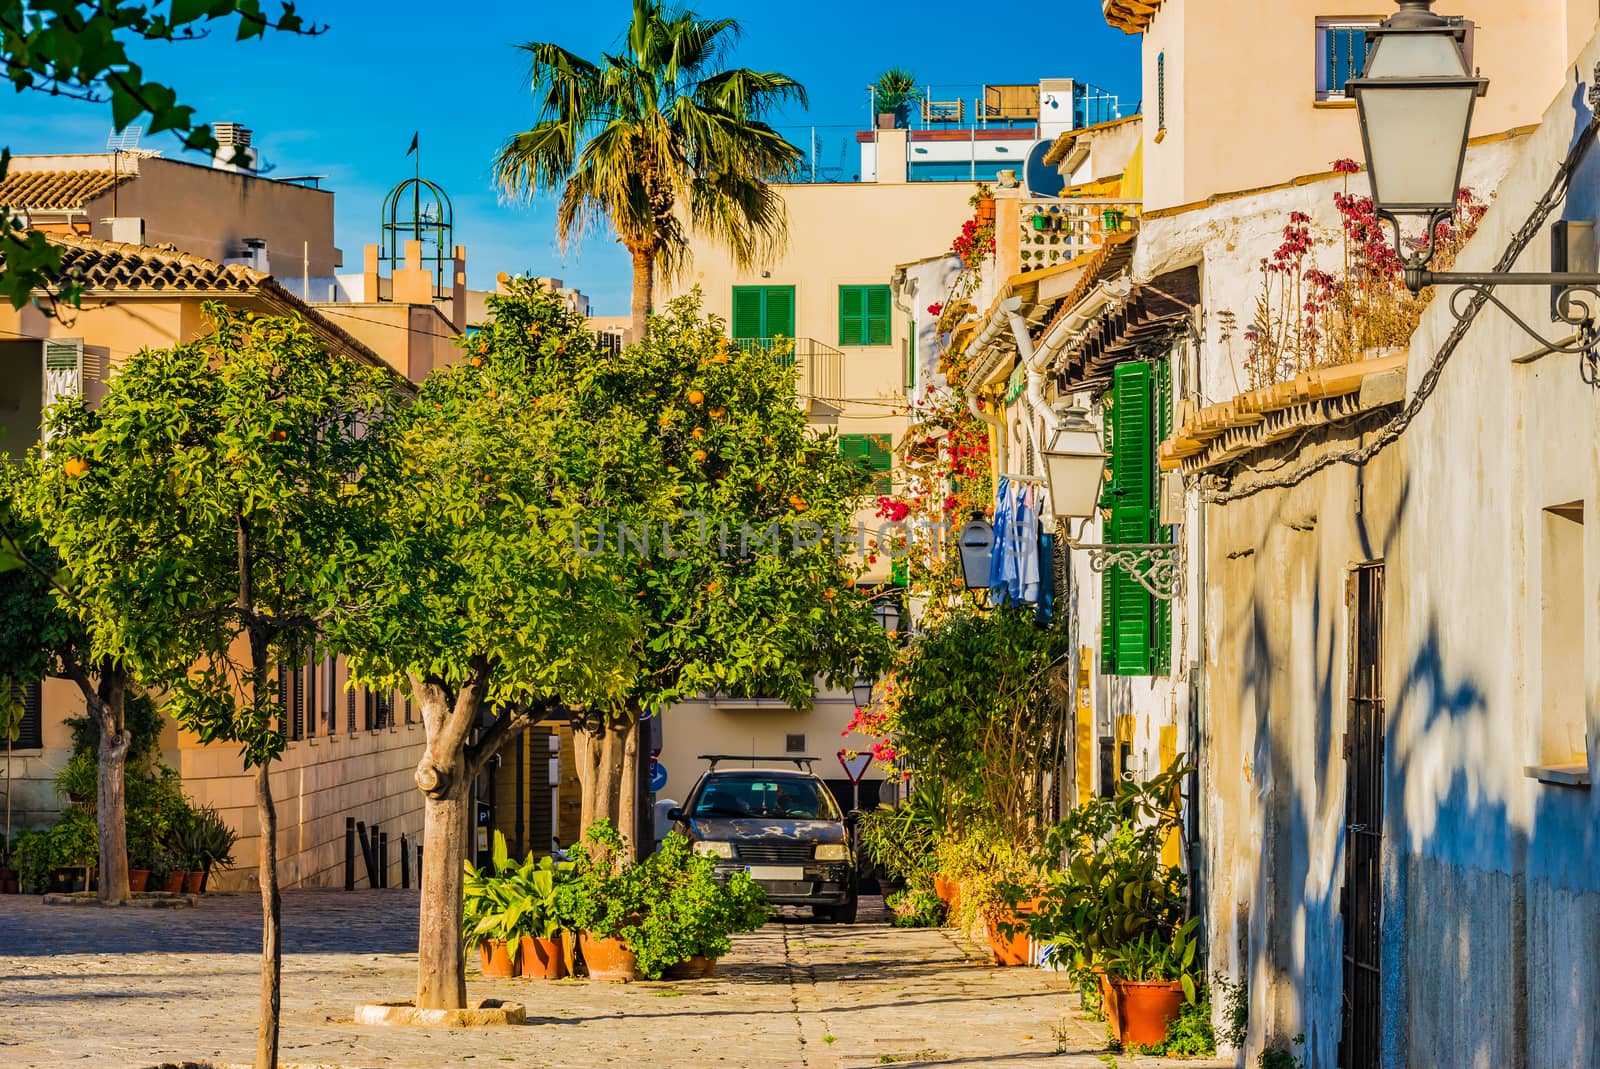 Mediterranean old town of Palma de Majorca, Spain by Vulcano